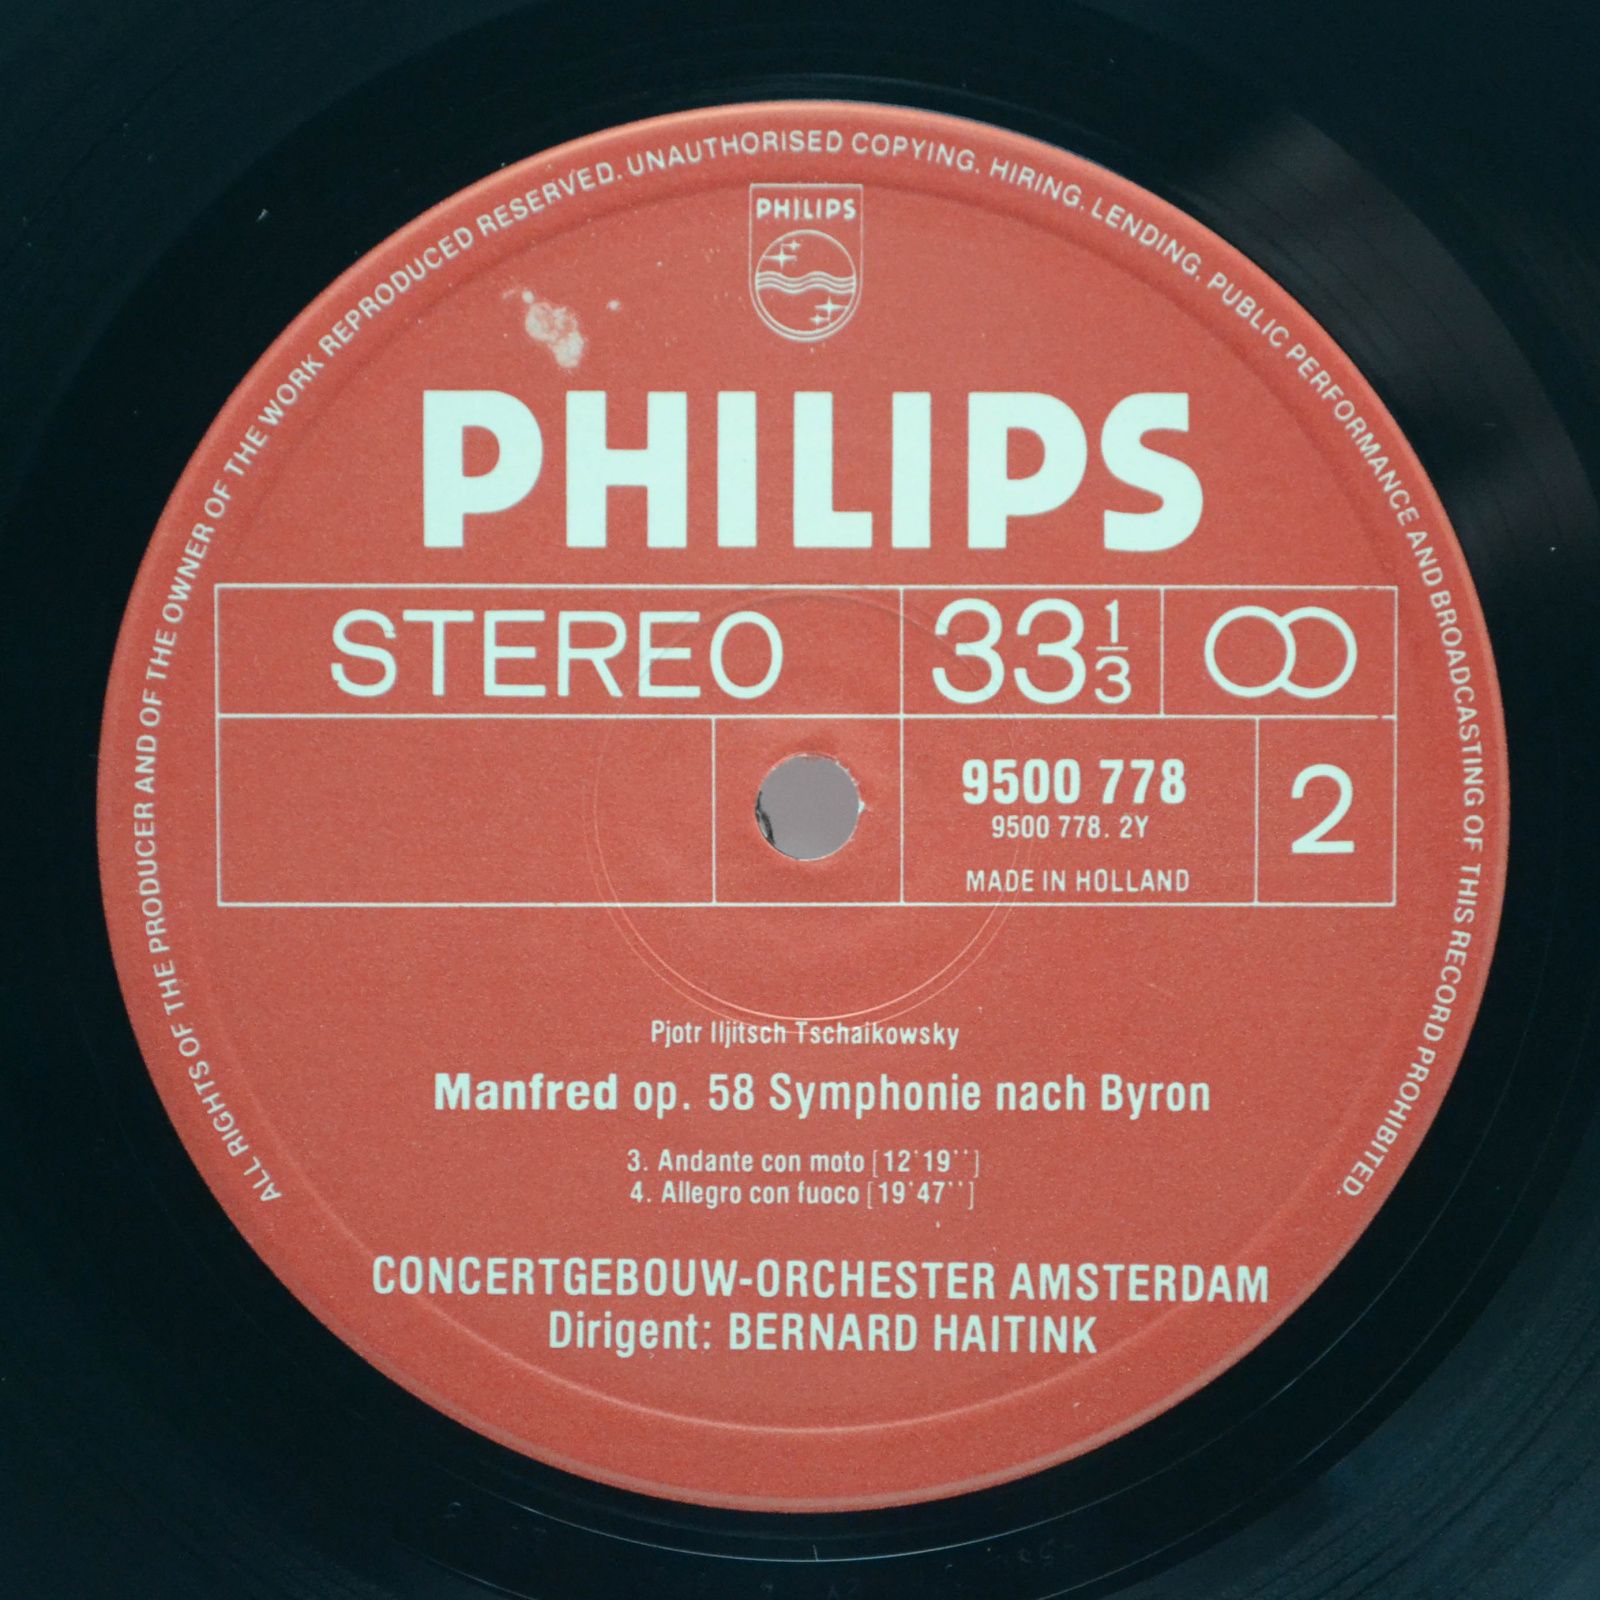 Tchaikovsky – Concertgebouw Orchestra, Amsterdam, Bernard Haitink — “Manfred” Symphony, 1980